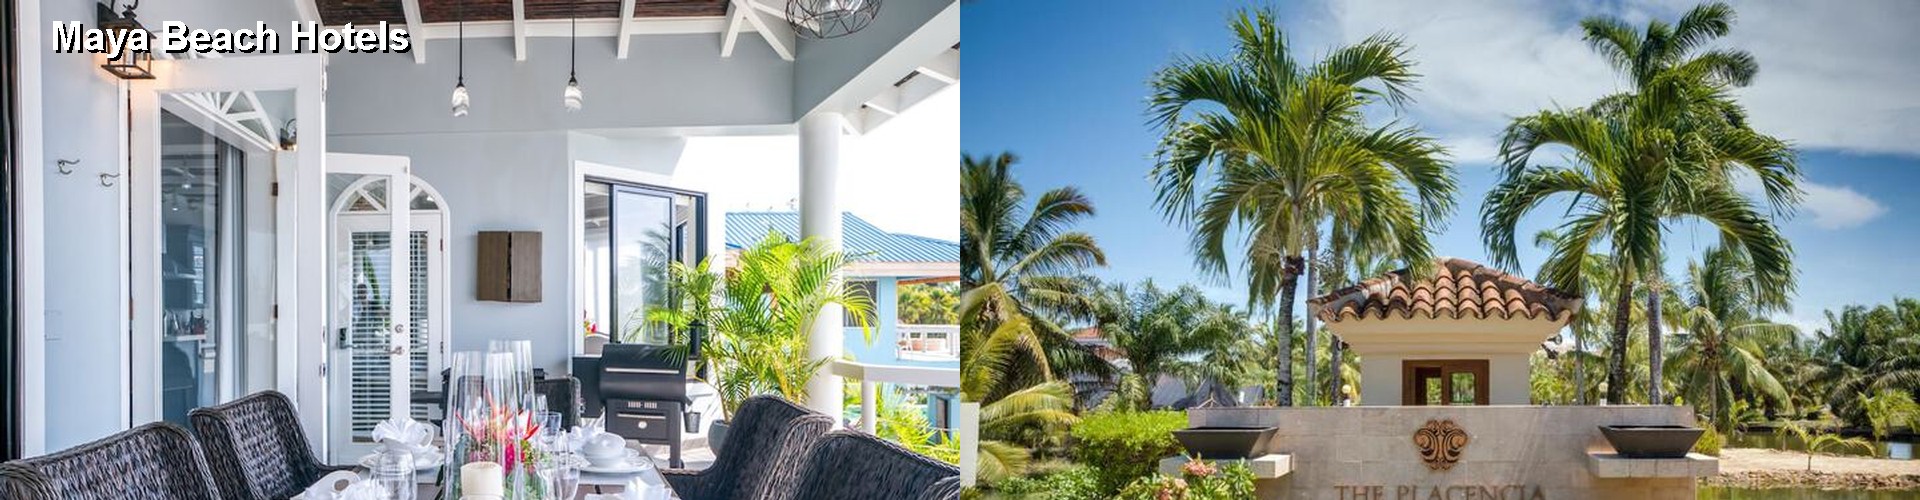 5 Best Hotels near Maya Beach